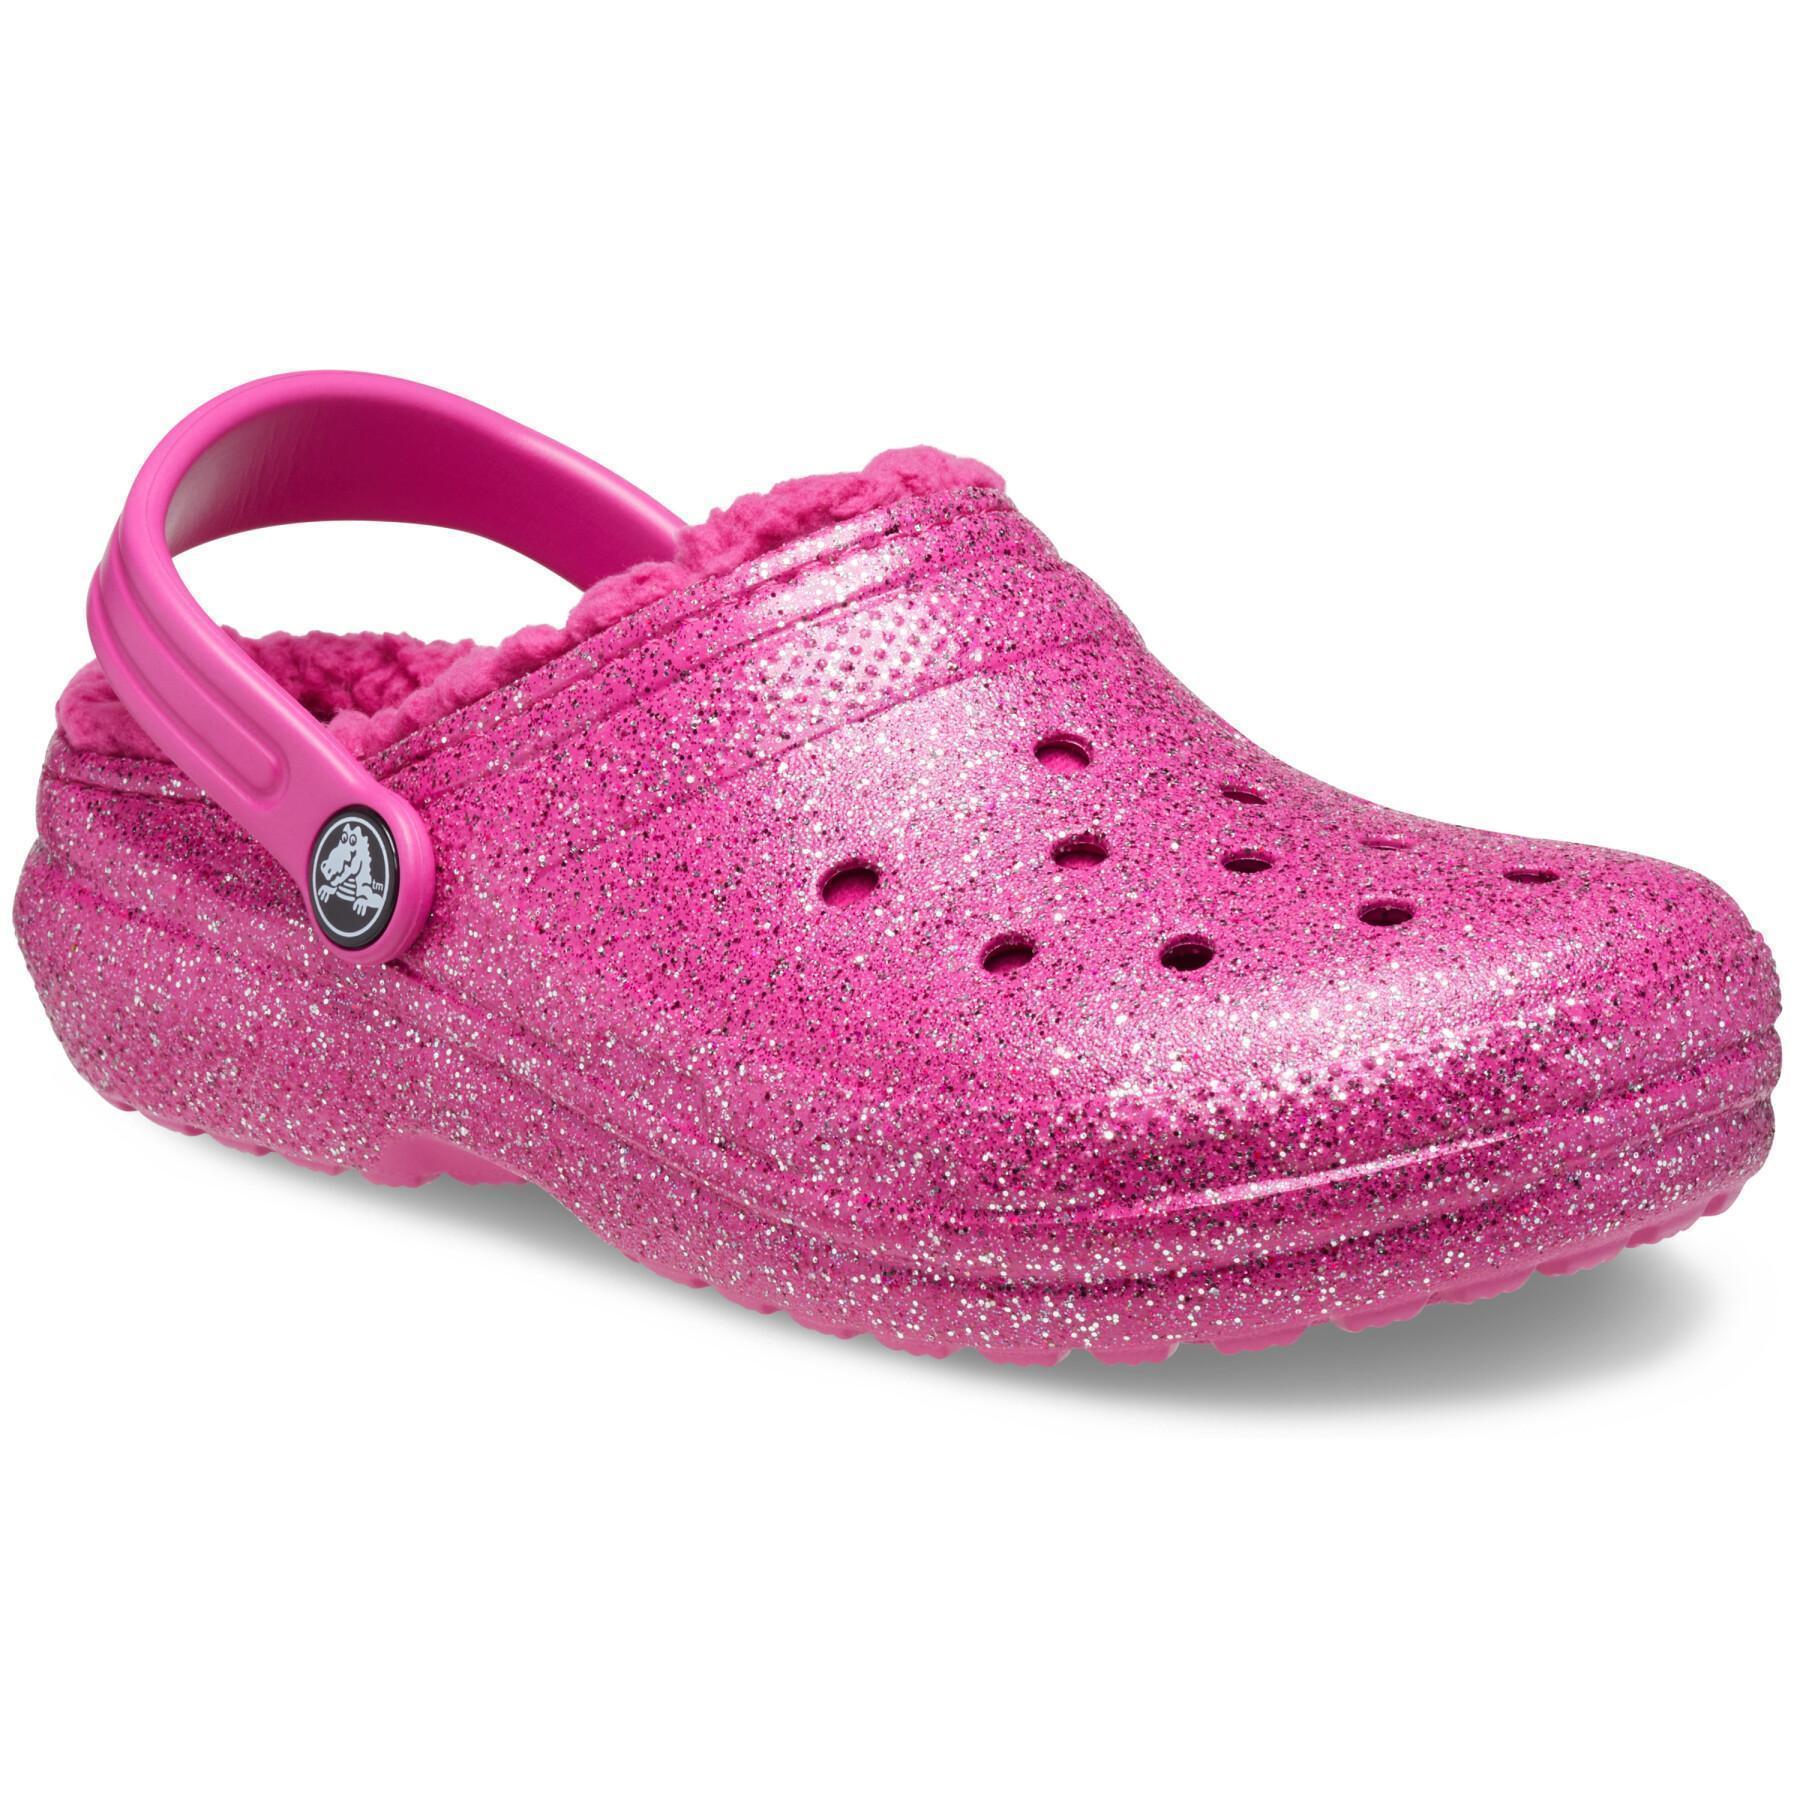 Children's clogs Crocs Classic Lined Glitter